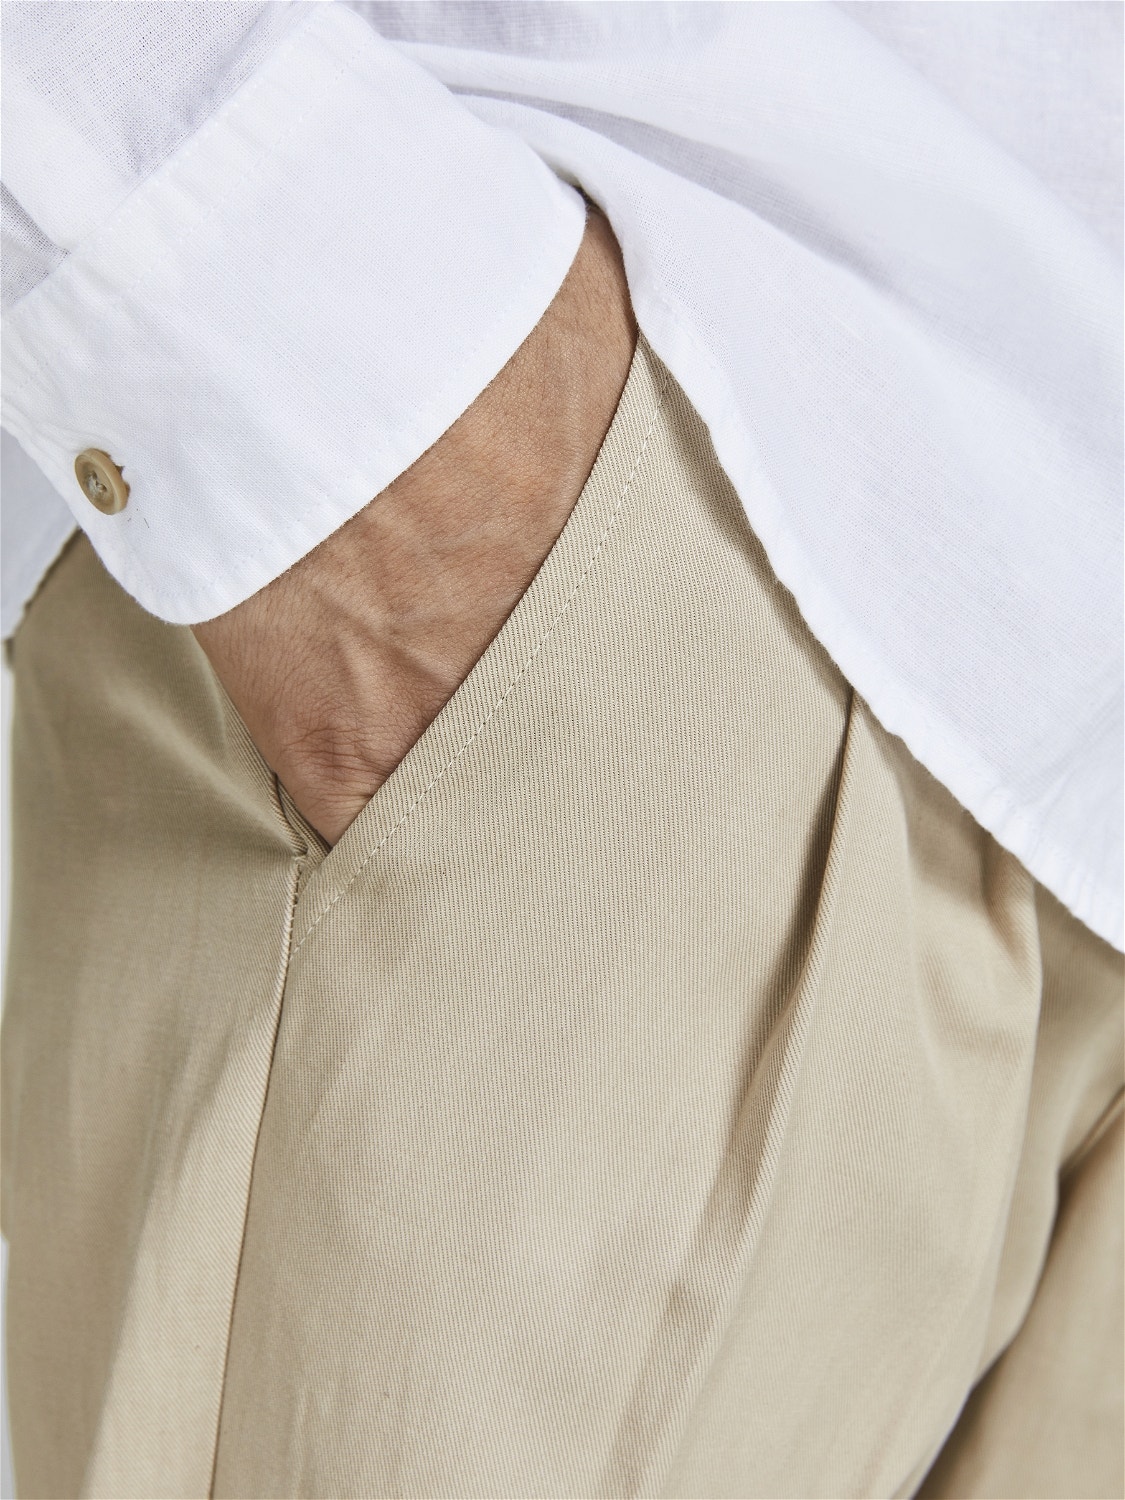 Jack & Jones Pantaloni chino Regular Fit -Oxford Tan - 12210190